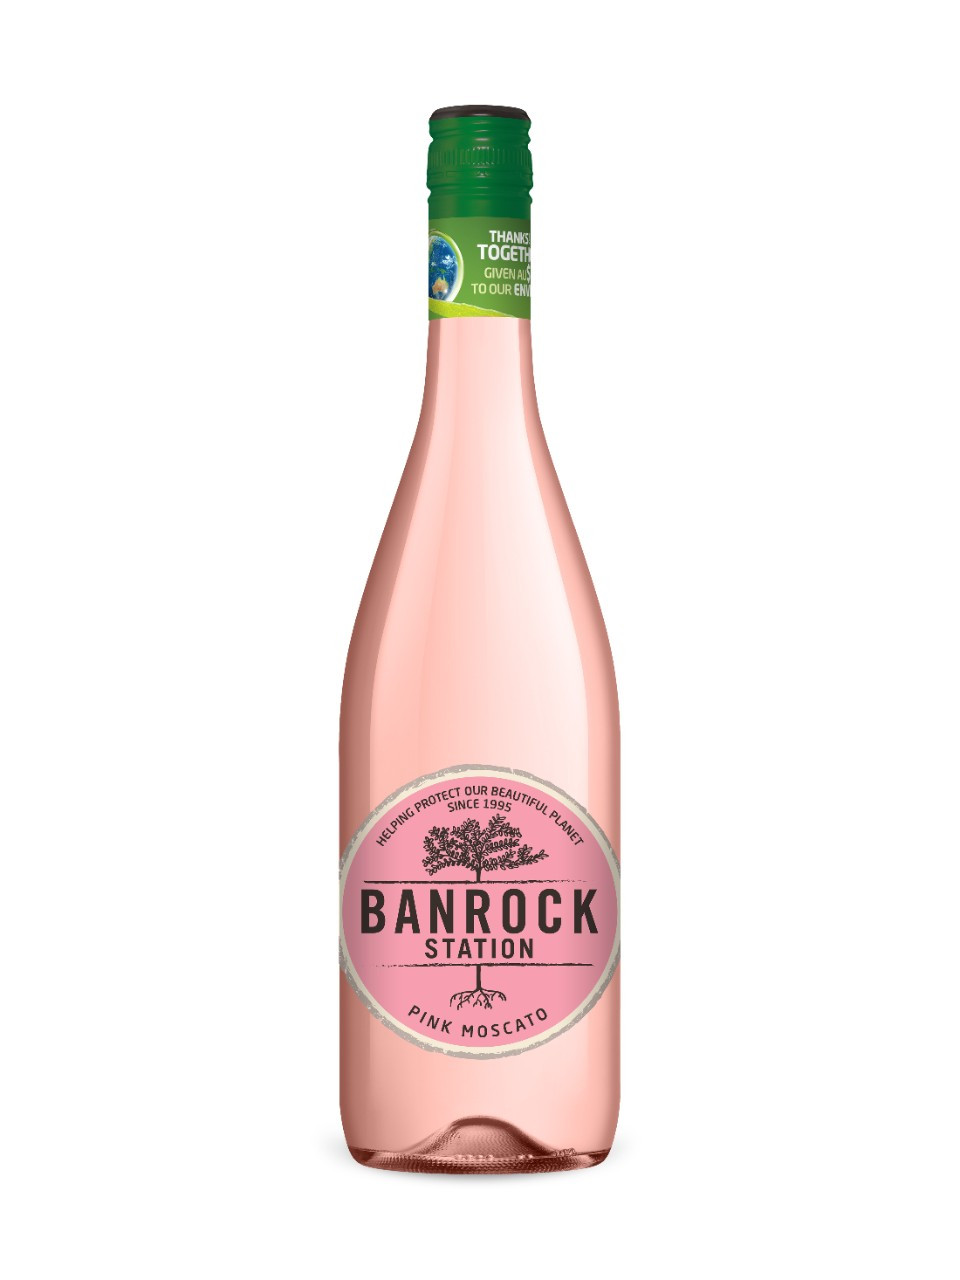 Banrock station pink moscato rosé